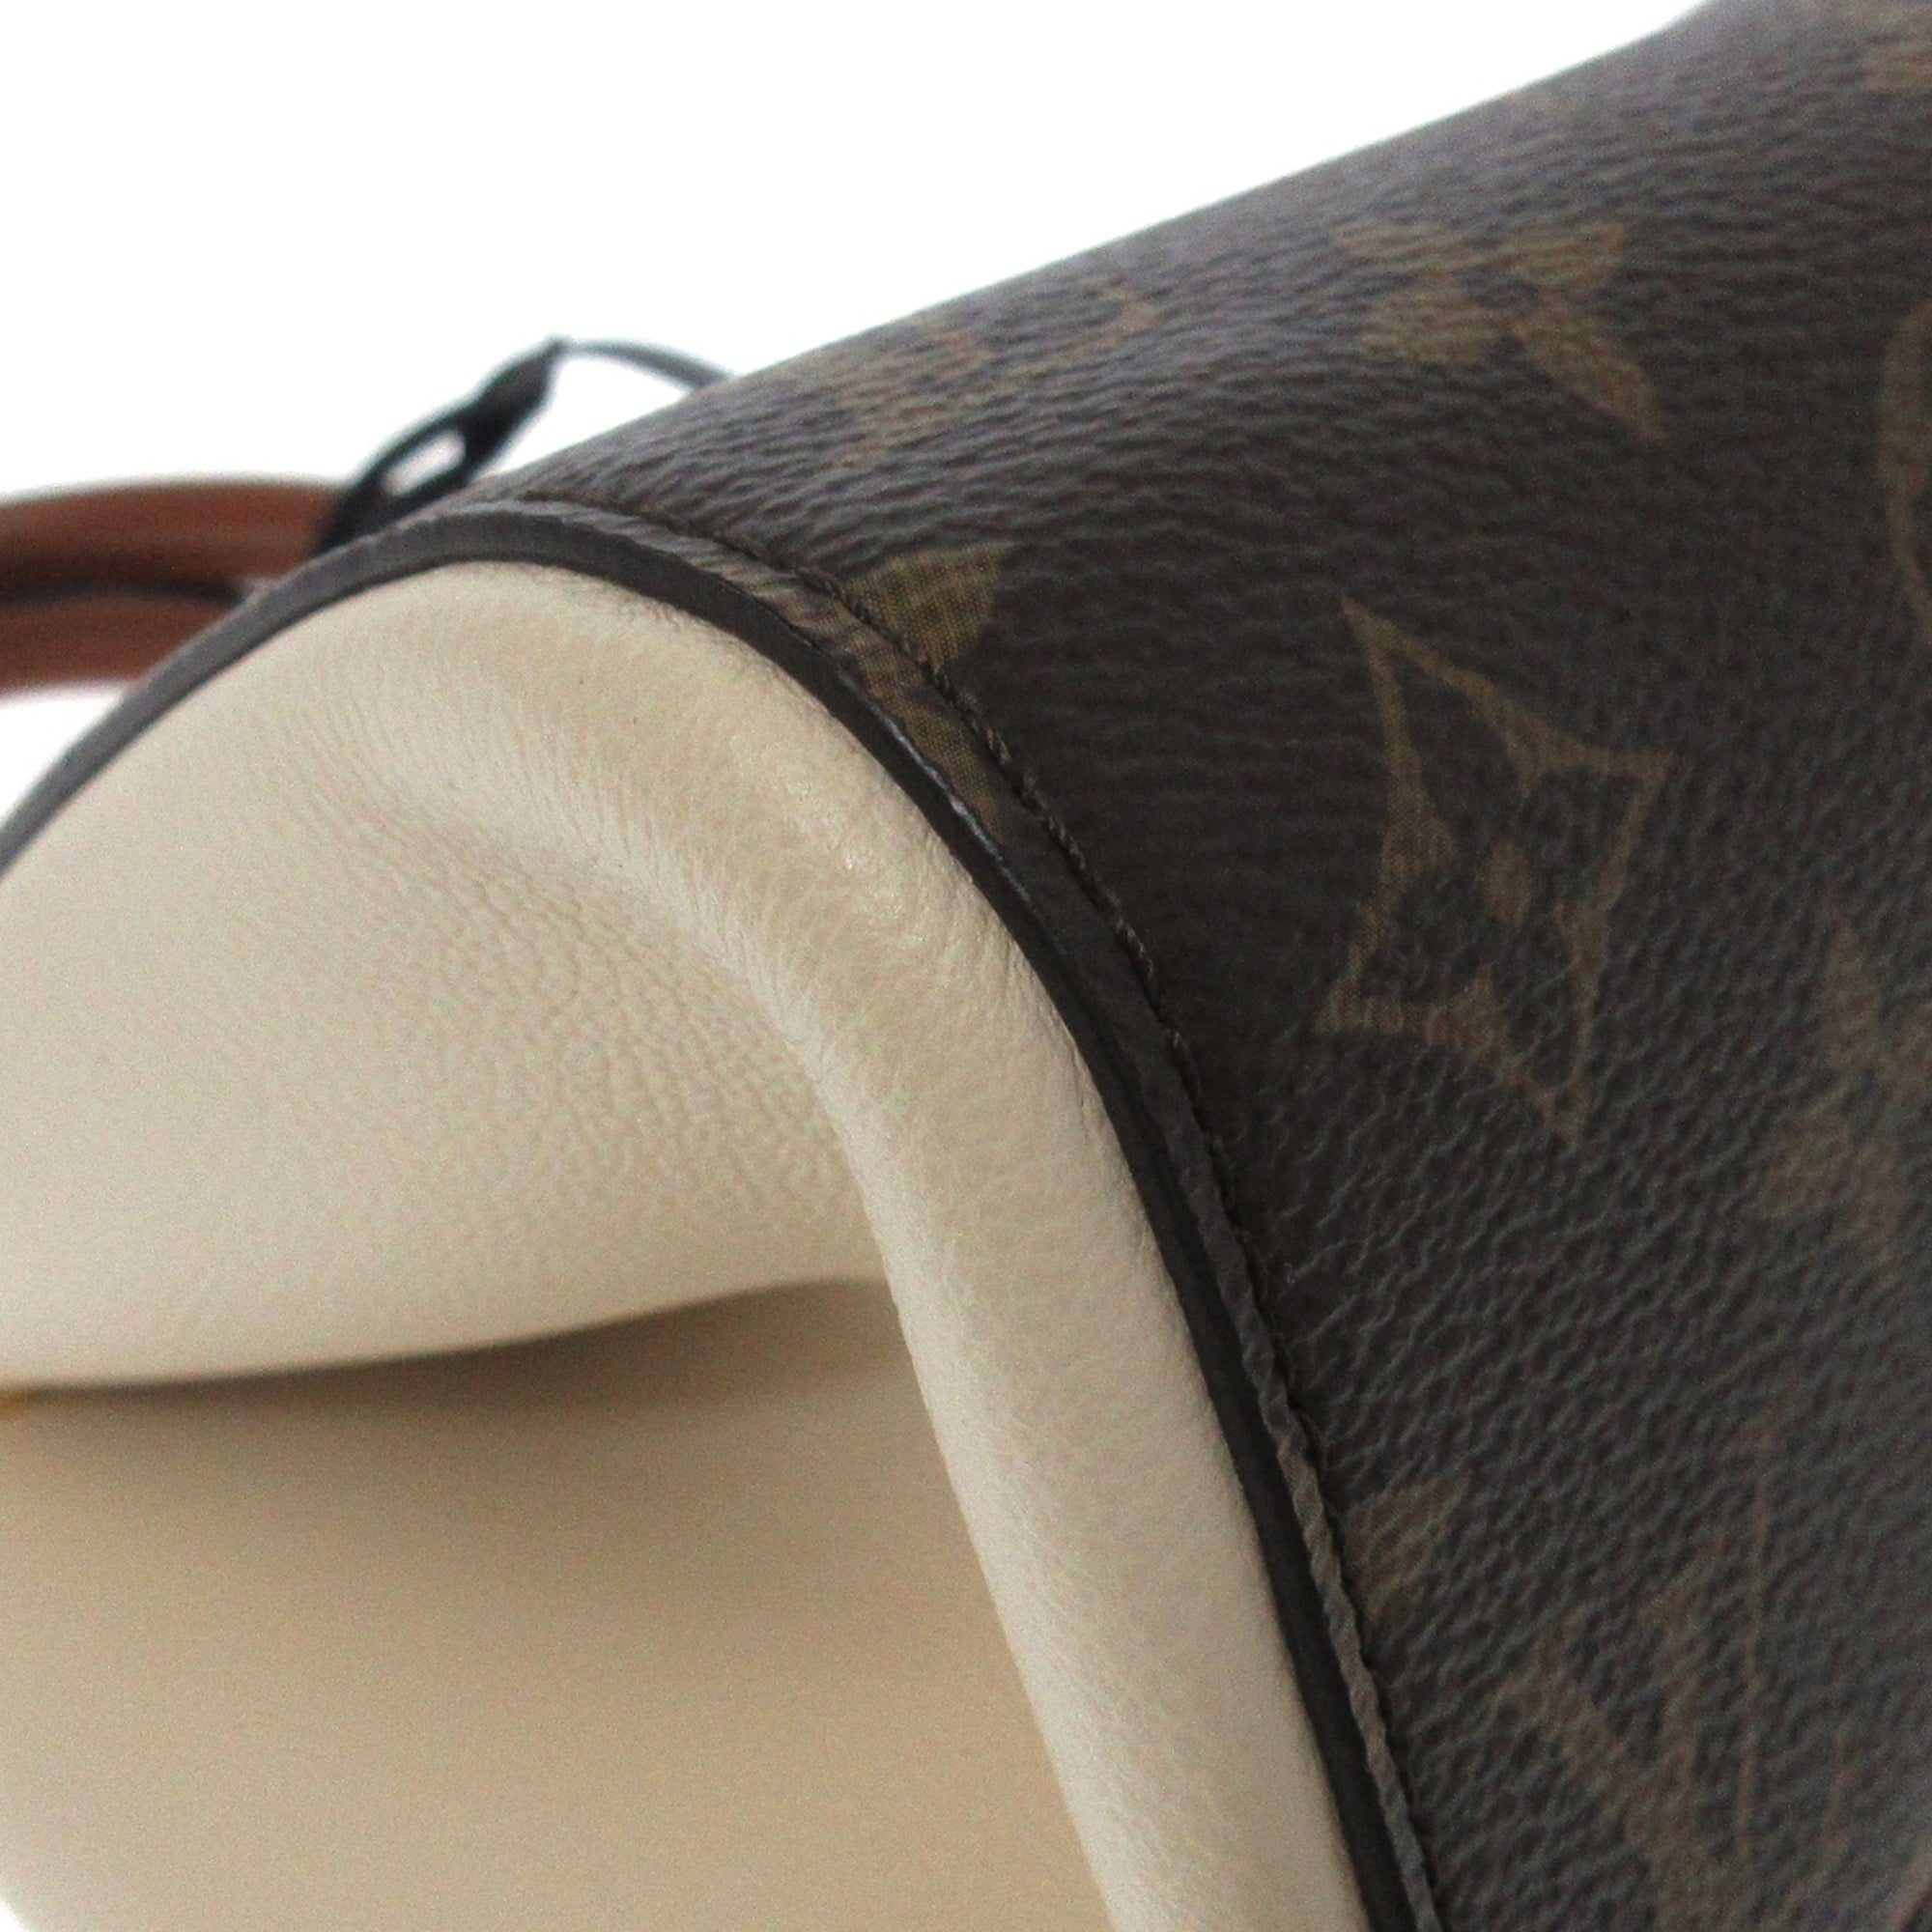 Louis Vuitton M45389 Fold Tote PM 2WAY Bag Handbag Shoulder Bag